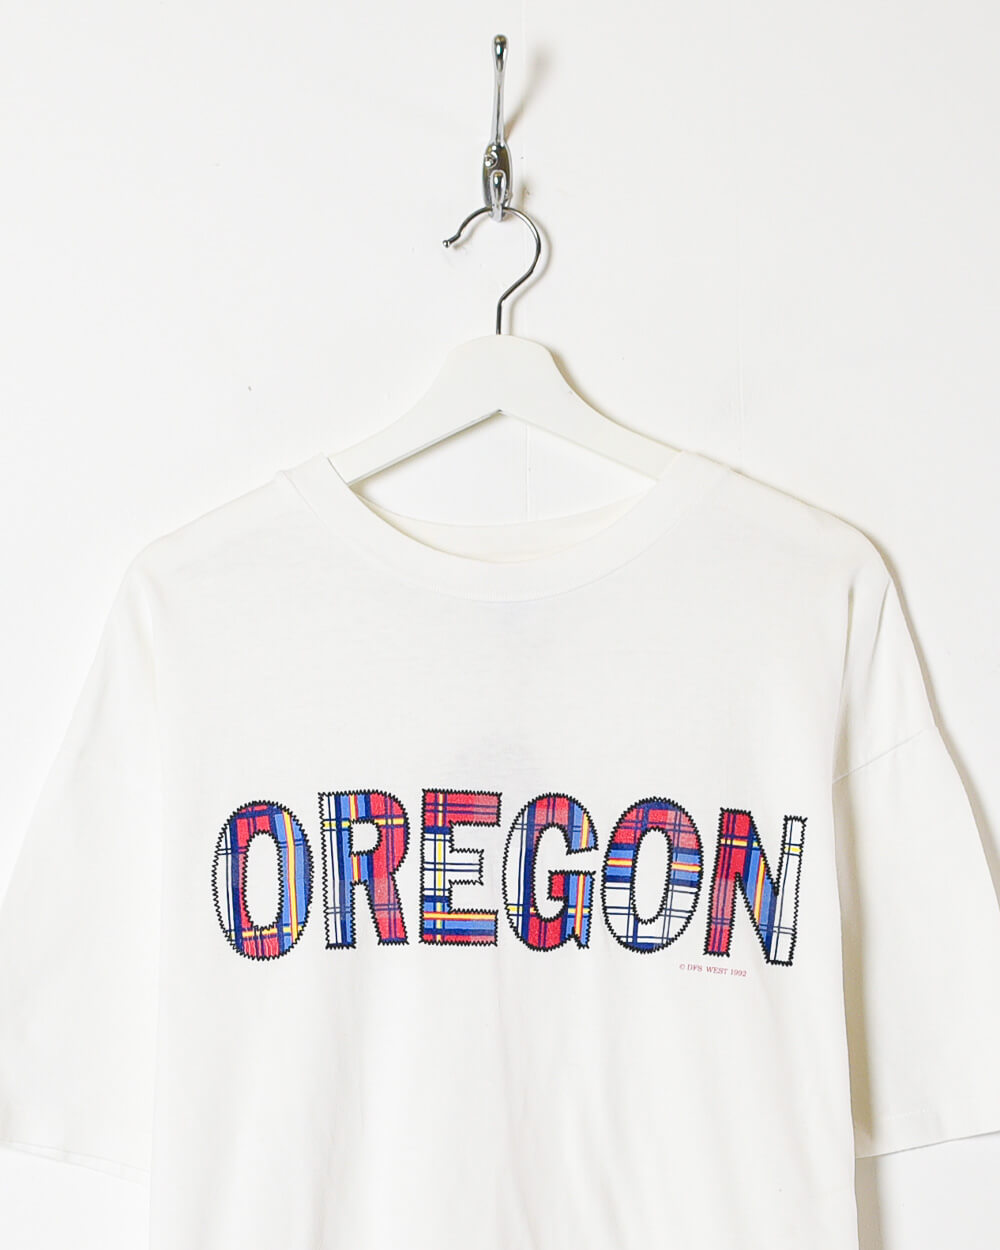 White Hanes Oregon T-Shirt - X-Large